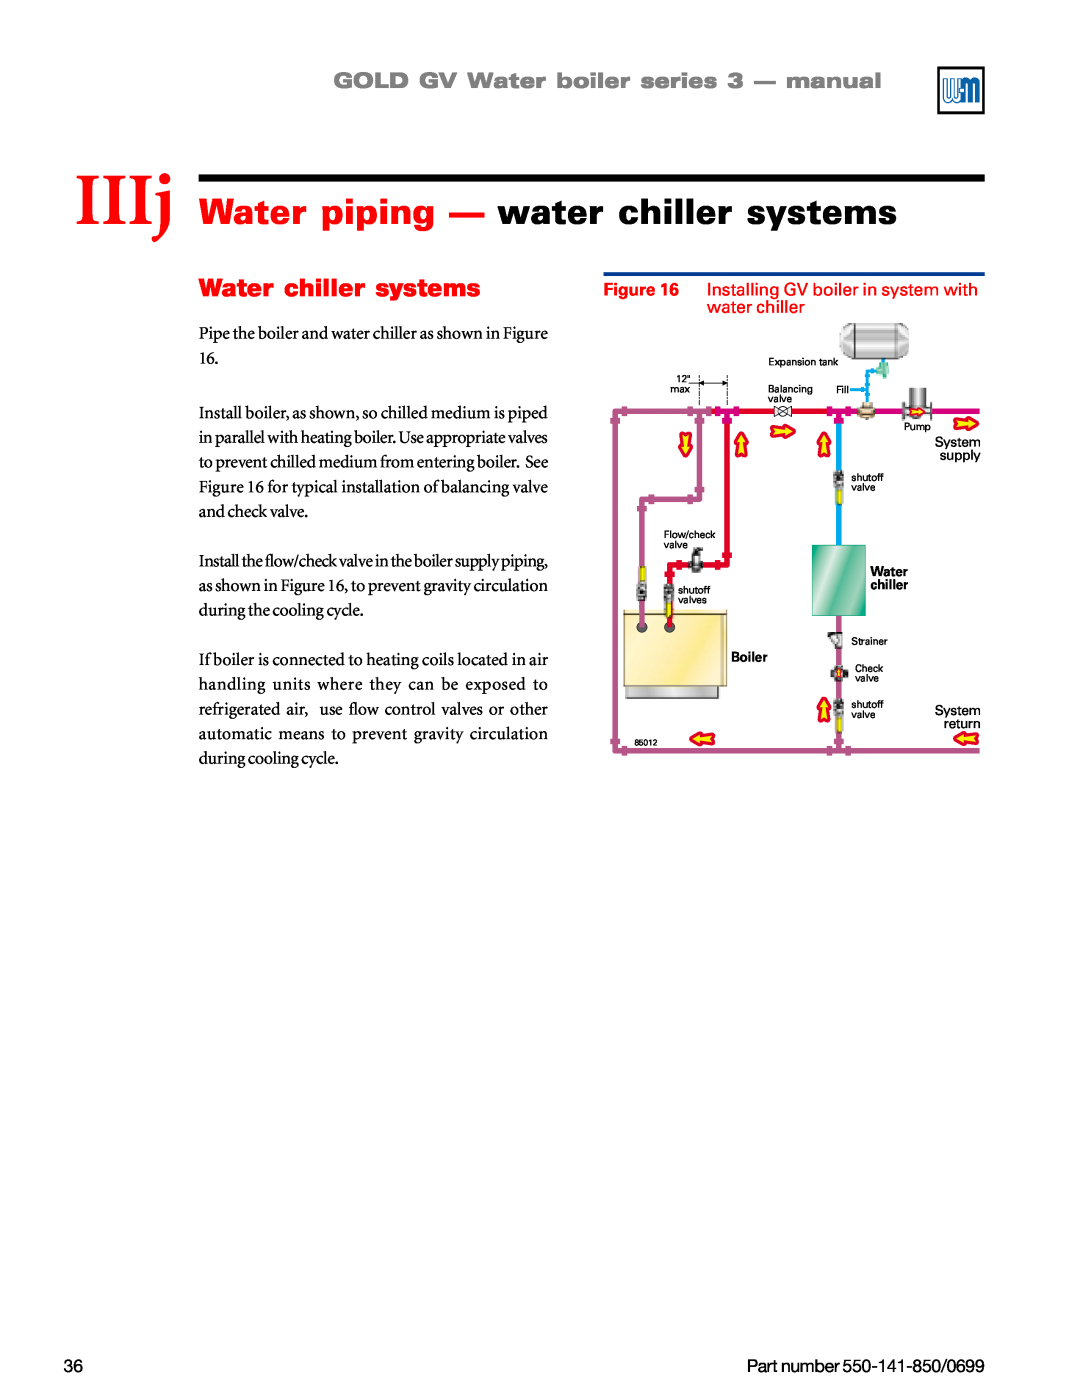 Weil-McLain GOLD DV WATER BOILER, 550-141-850/0599 manual IIIj Water piping - water chiller systems, Water chiller systems 